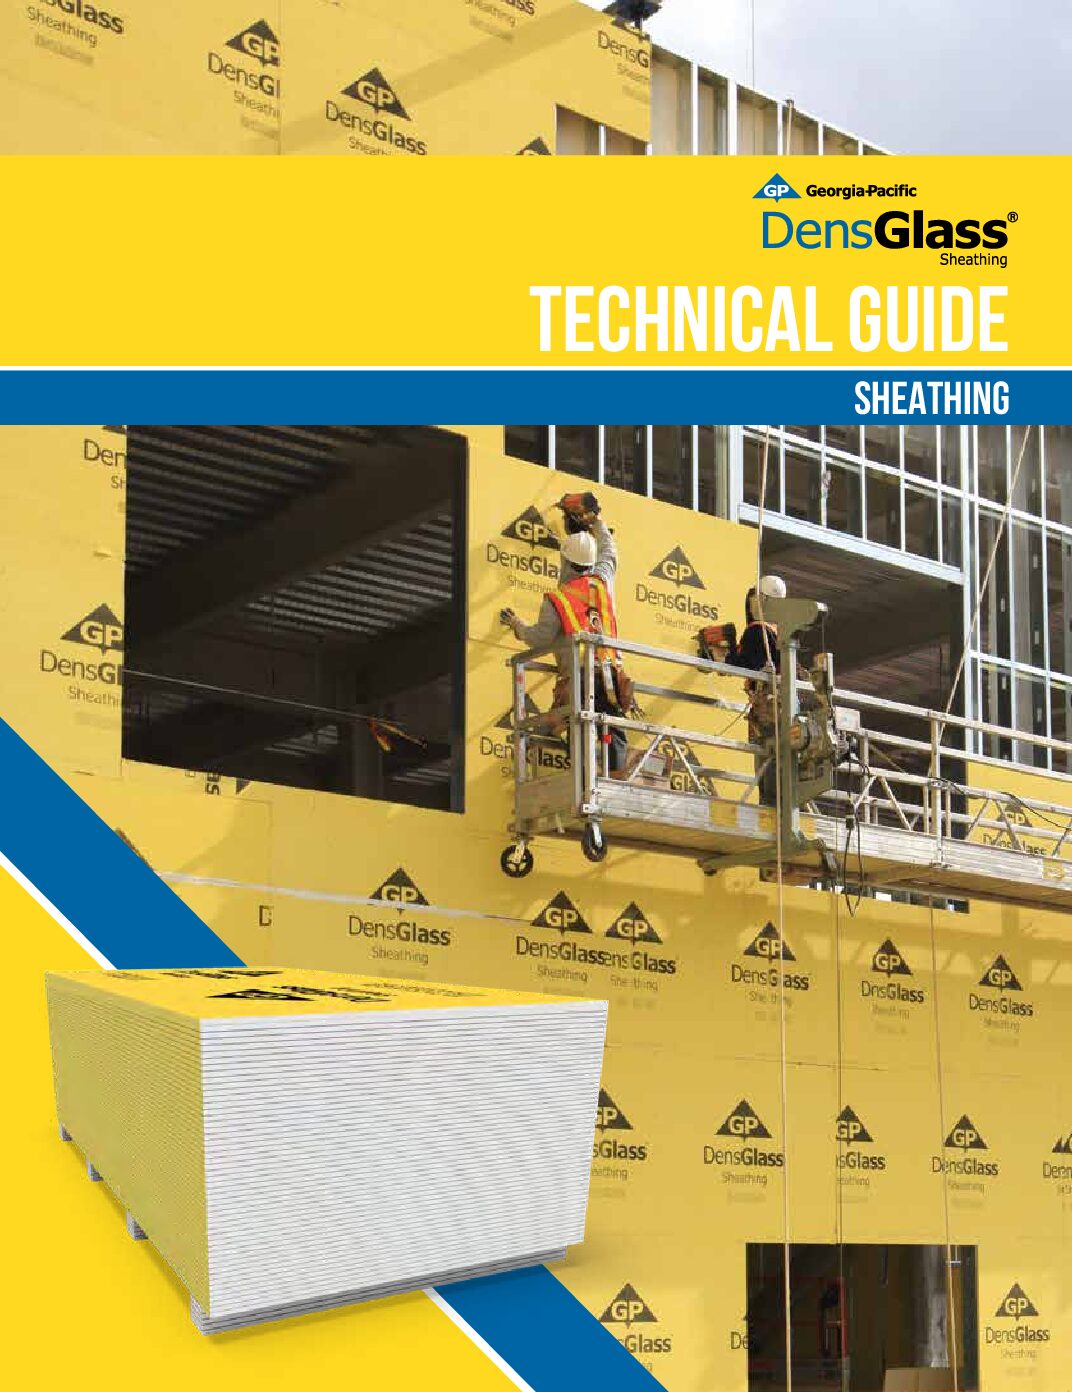 DensGlass Sheathing Technical Guide - Document Screen Grab